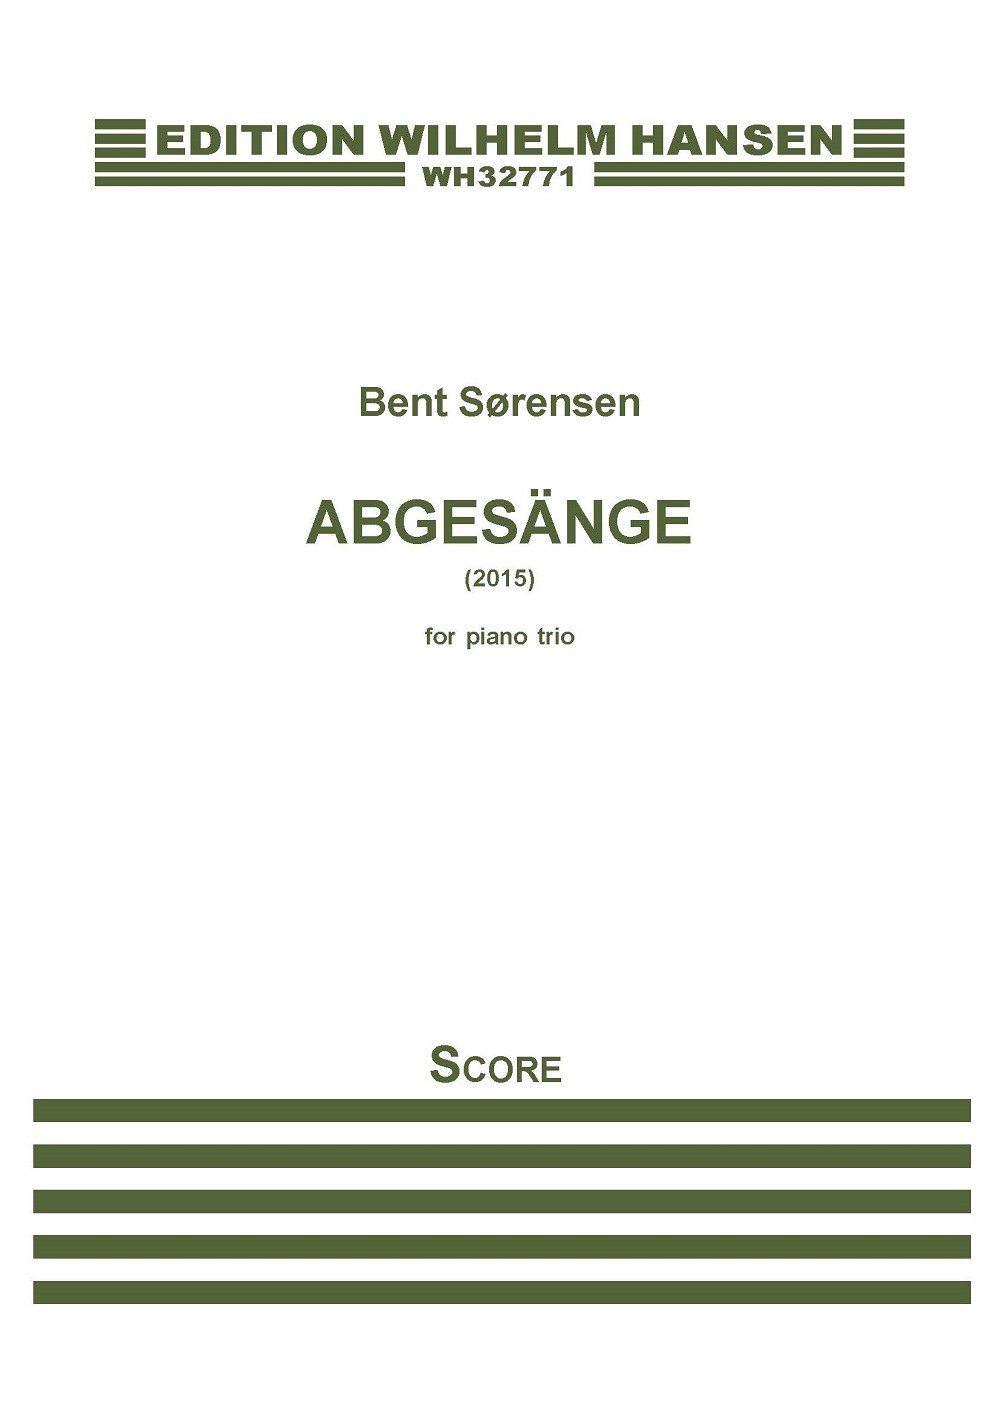 Bent Sørensen: Abgesänge: Chamber Ensemble: Score & Parts